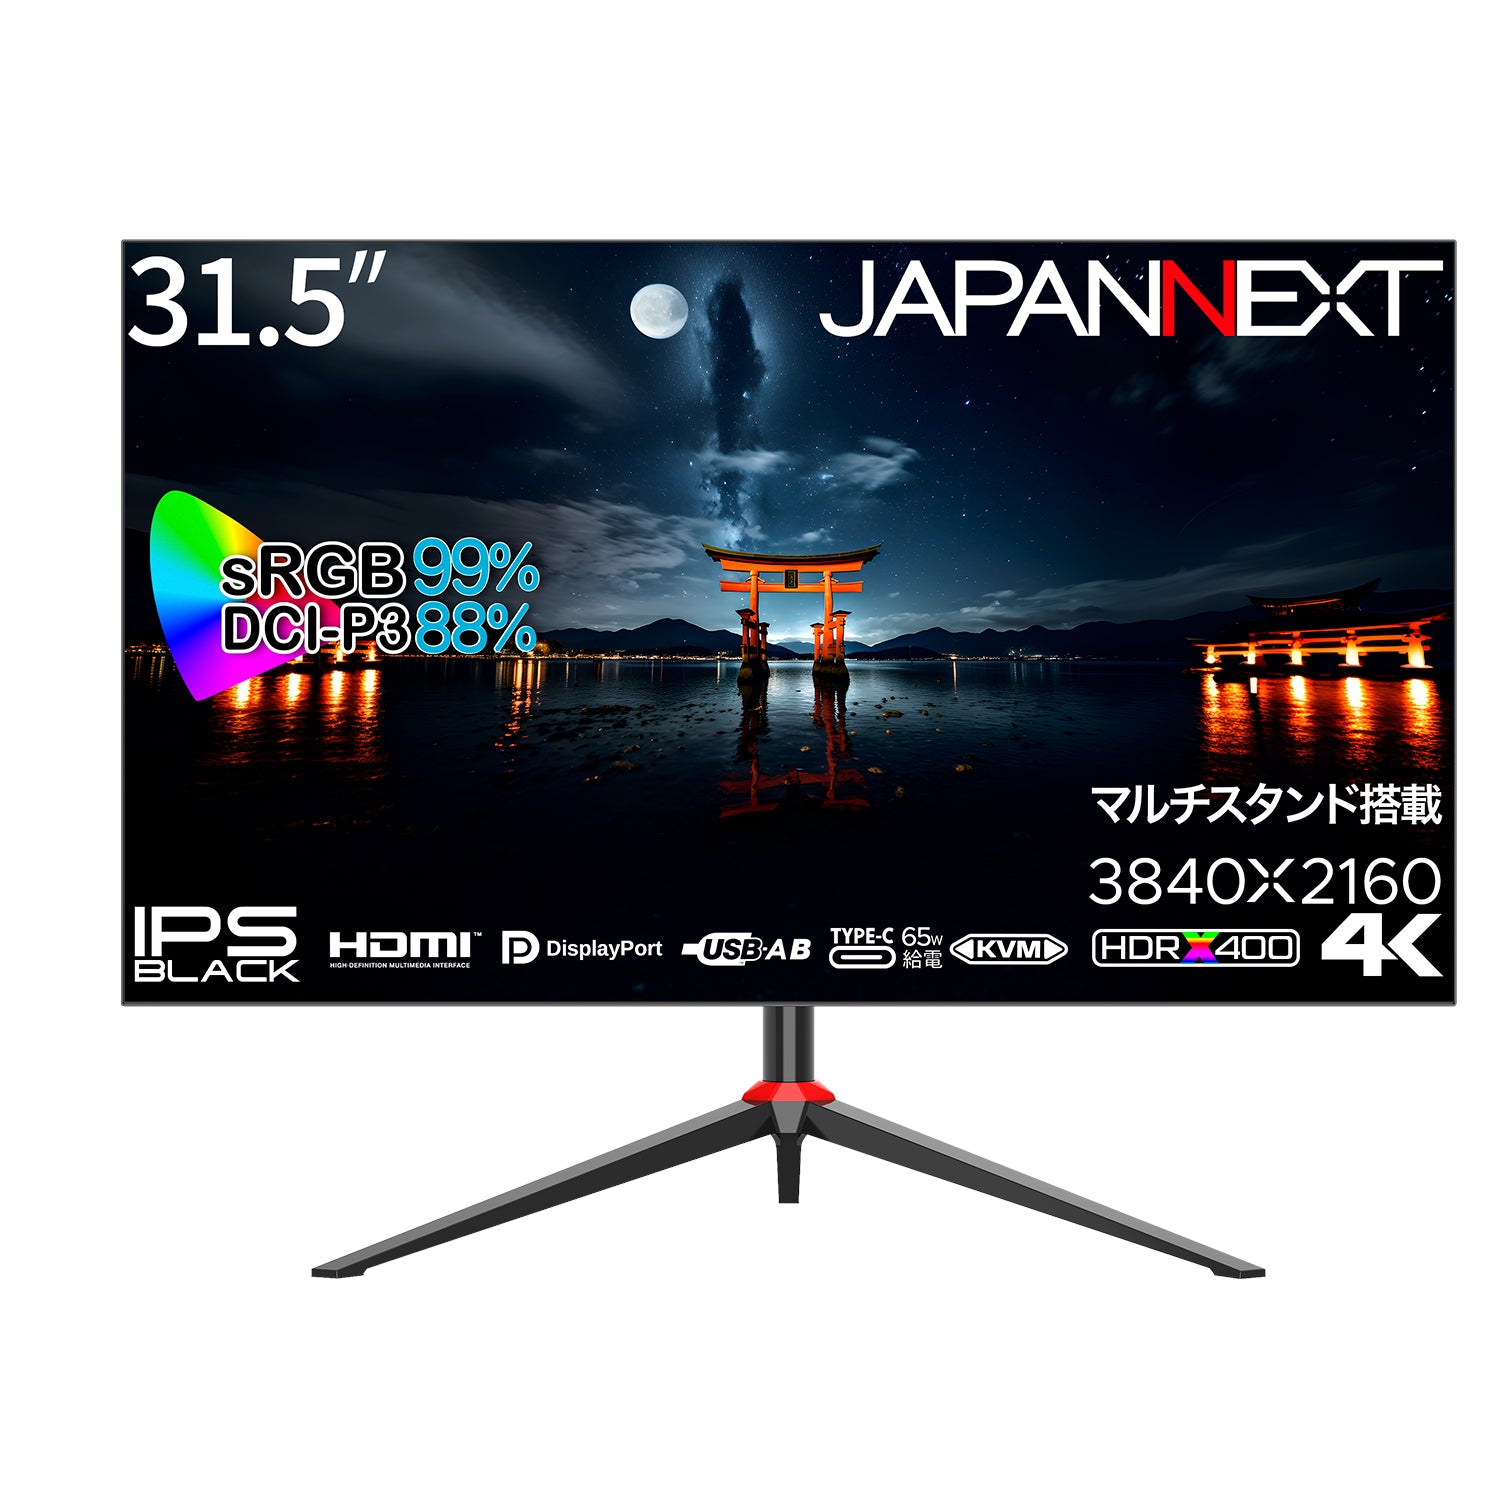 JAPANNEXT 31.5インチ IPS BLACKパネル搭載 4K(3840x2160)解像度 液晶 